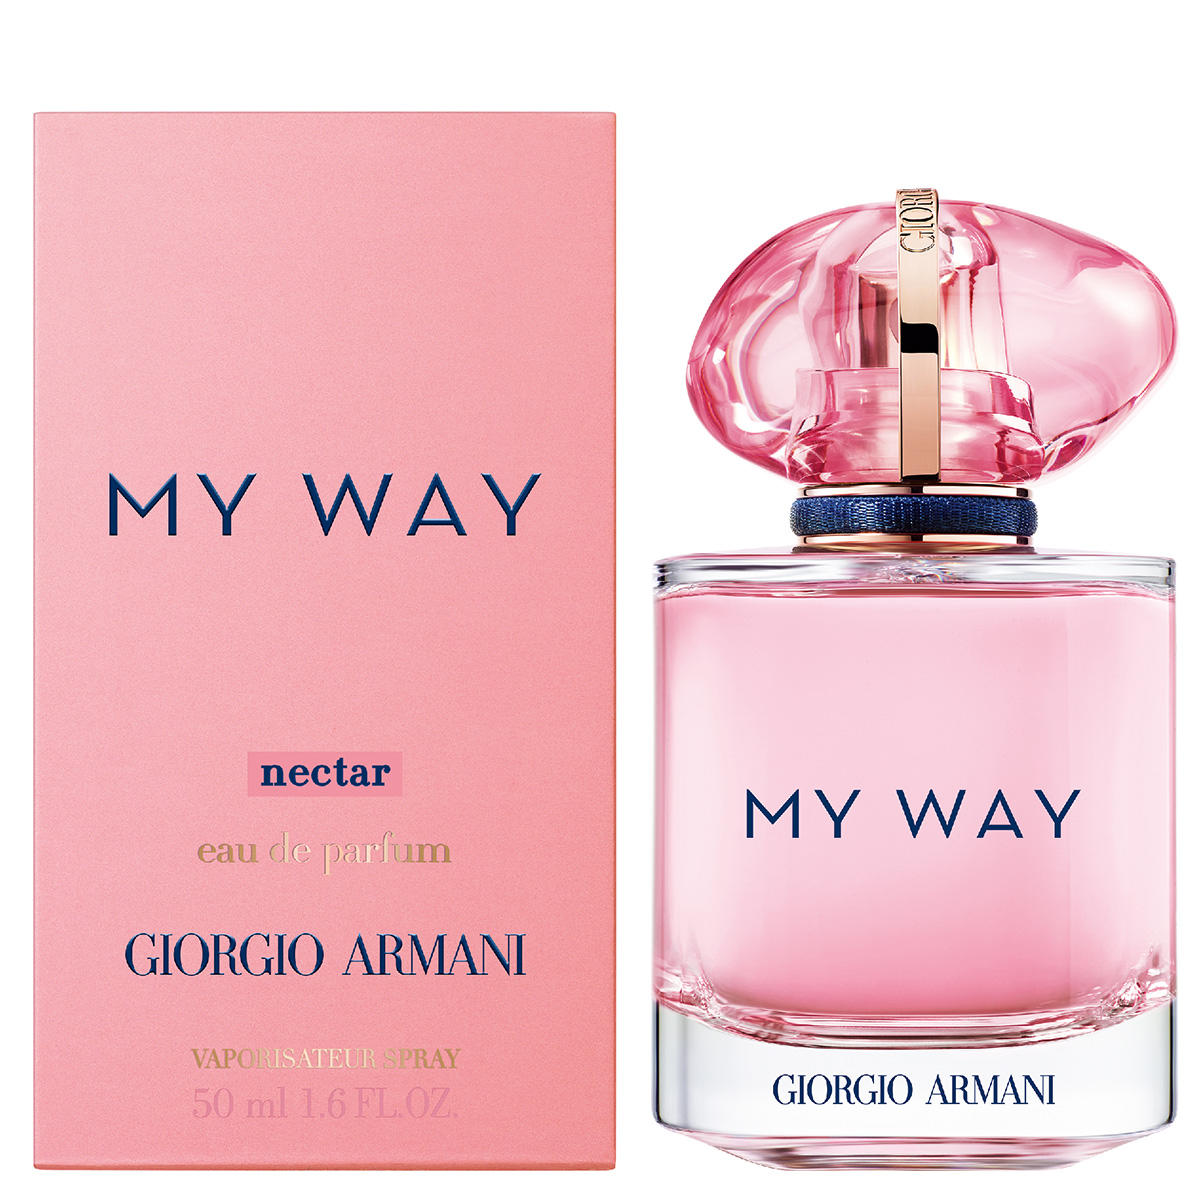 Giorgio Armani My Way Nectar Eau de Parfum 50 ml - 2